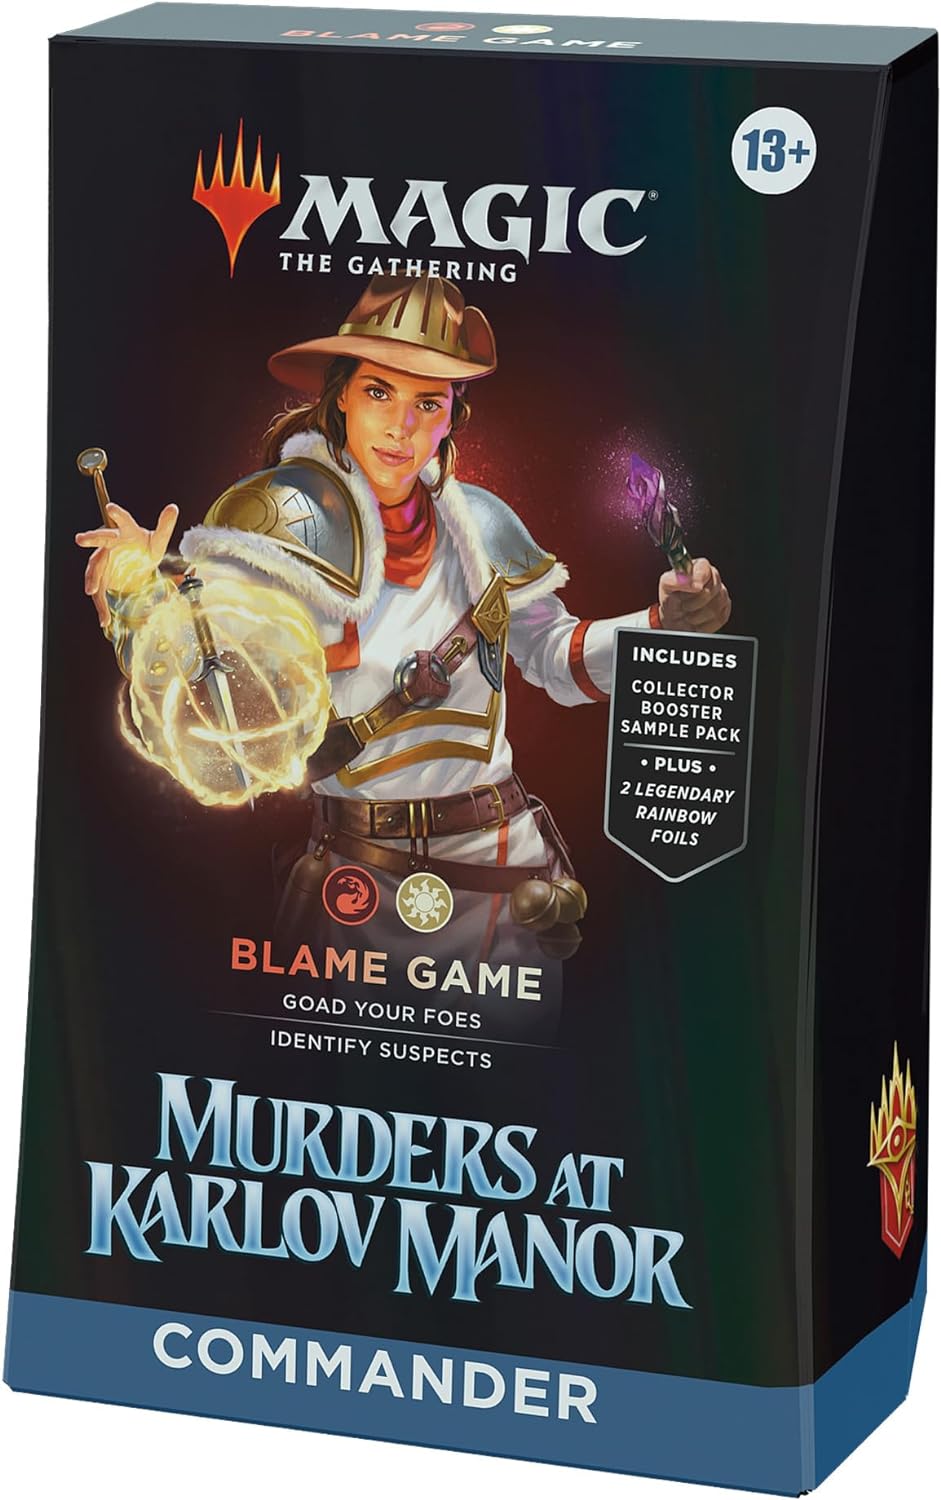 Magic The Gathering - Murders at Karlov Manor Commander Deck Blame Game MKIUXIF7W3 |0|